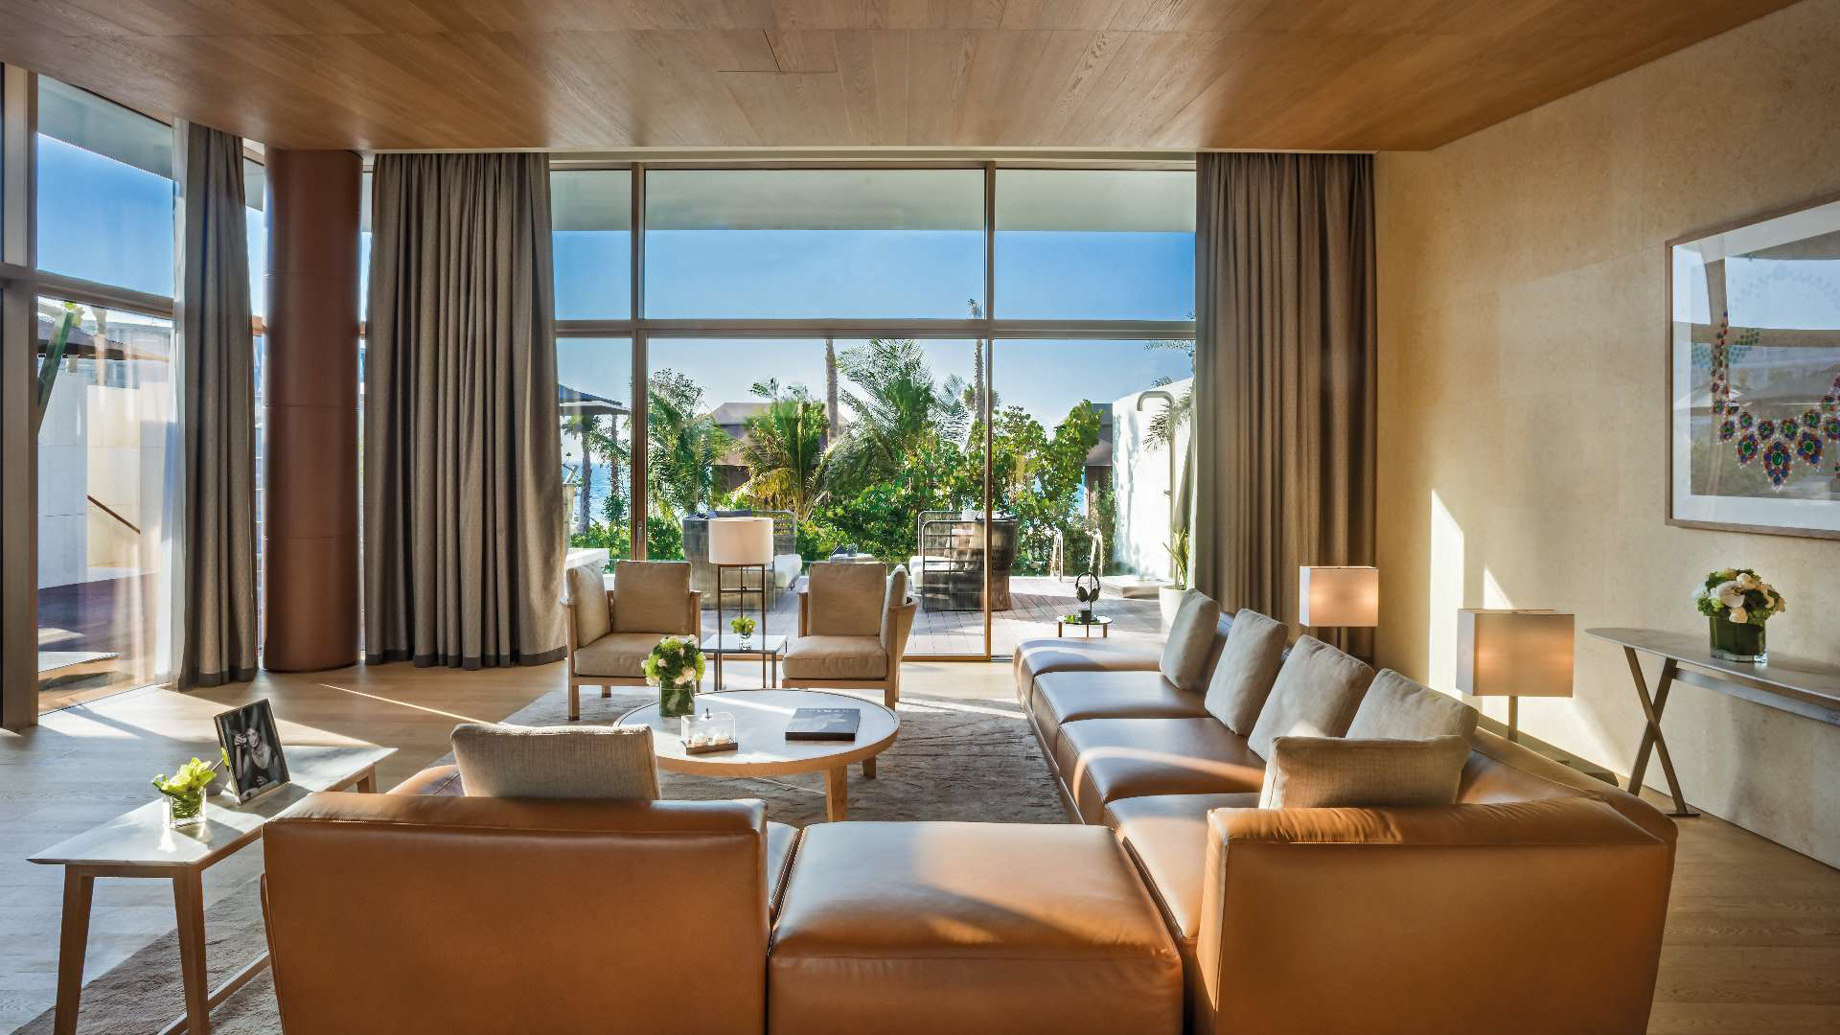 Bvlgari Resort Dubai – Jumeira Bay Island, Dubai, UAE – Guest Suite Living Room